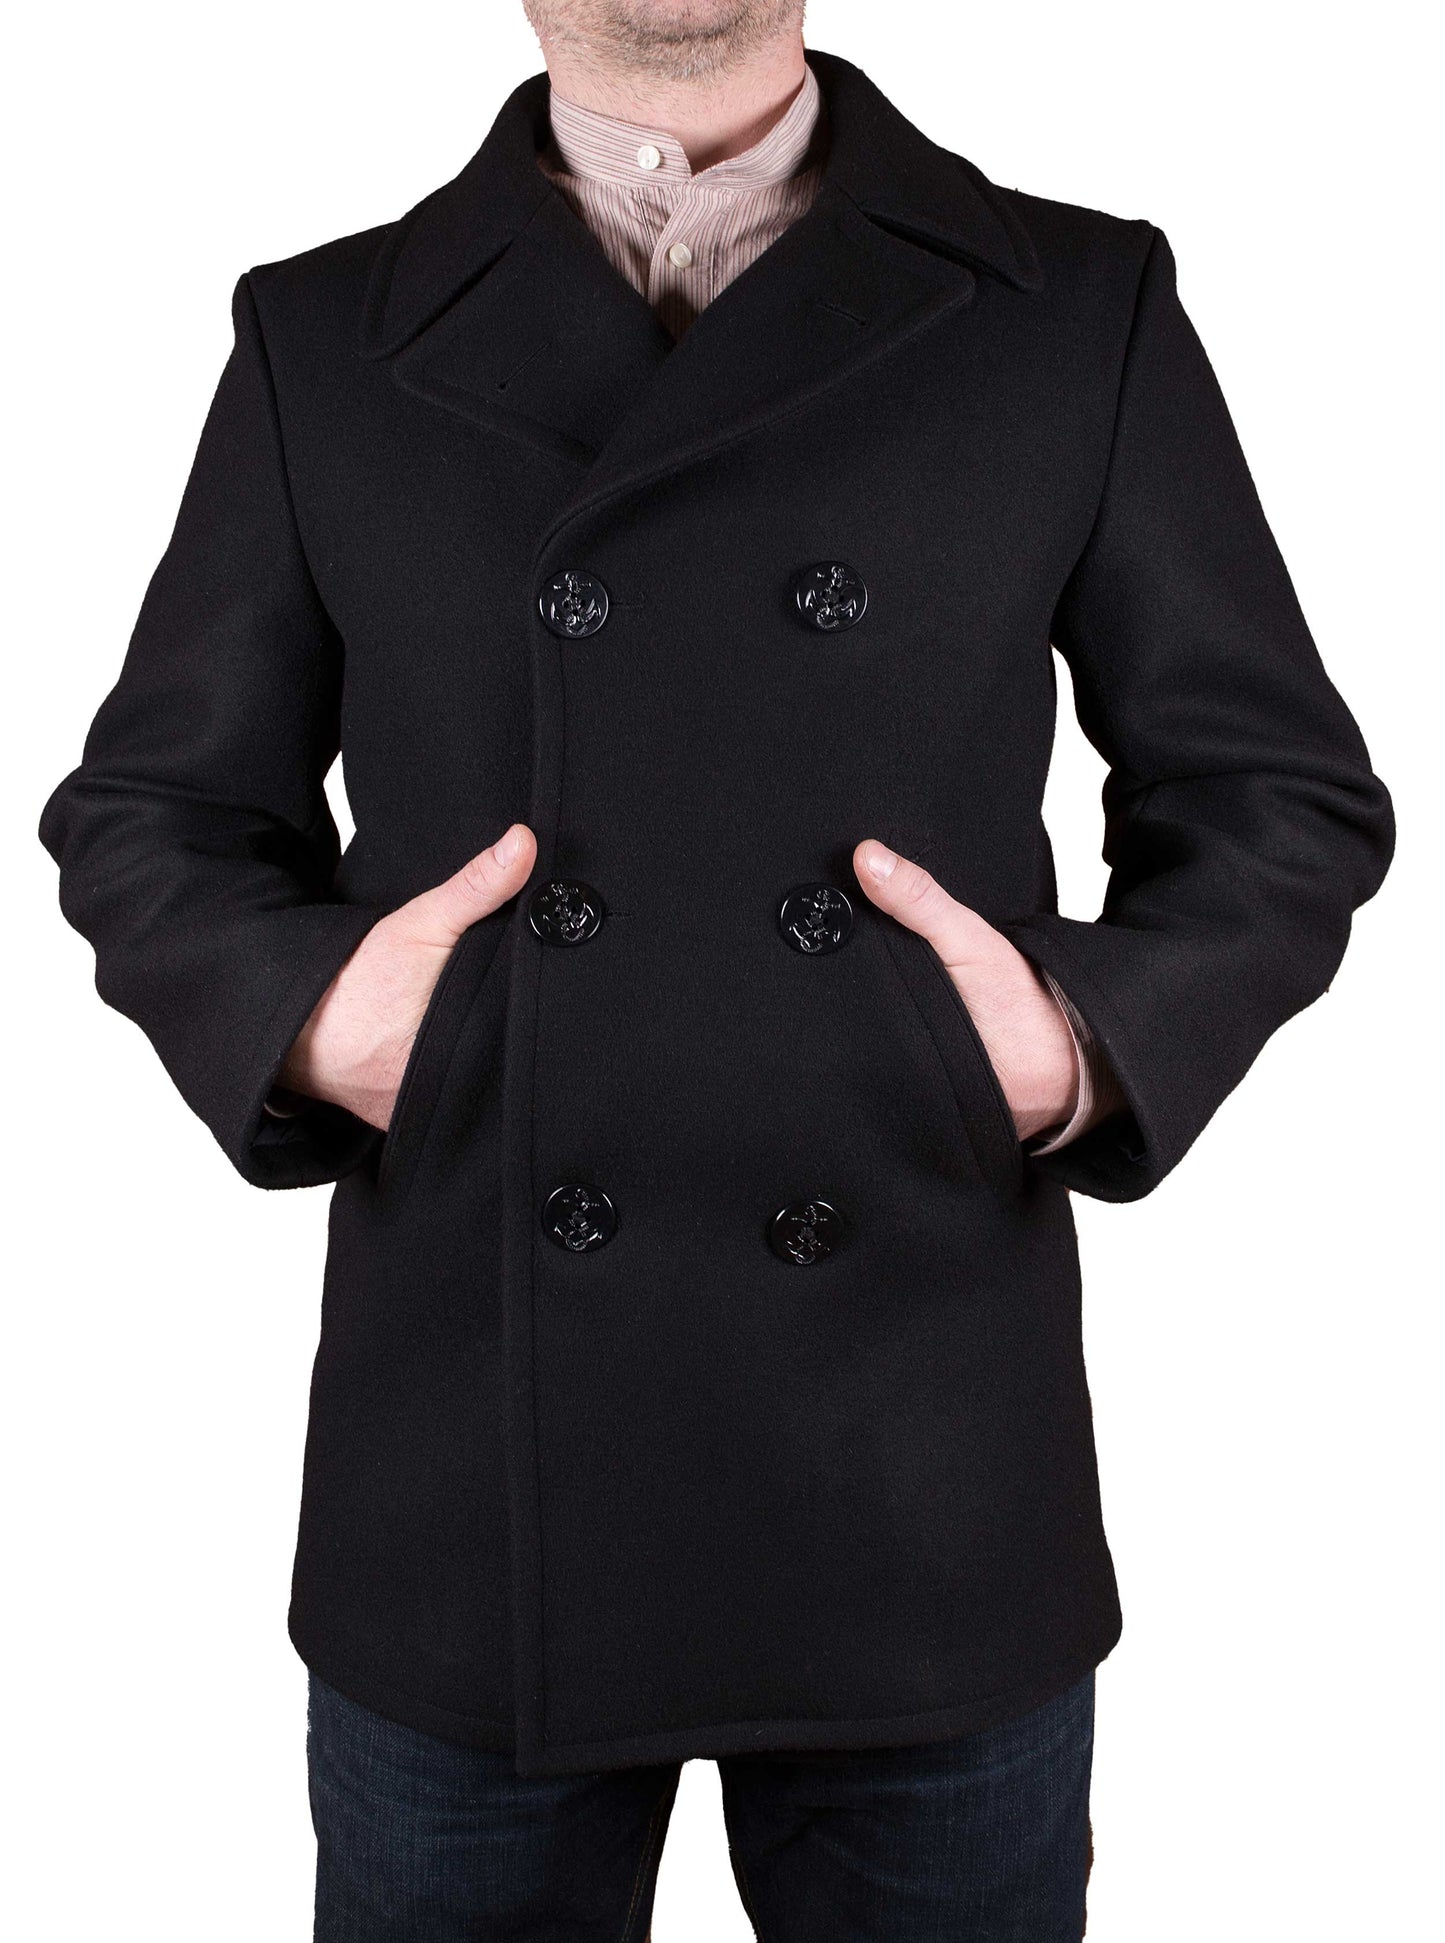 1938 Pea Coat Black Wool